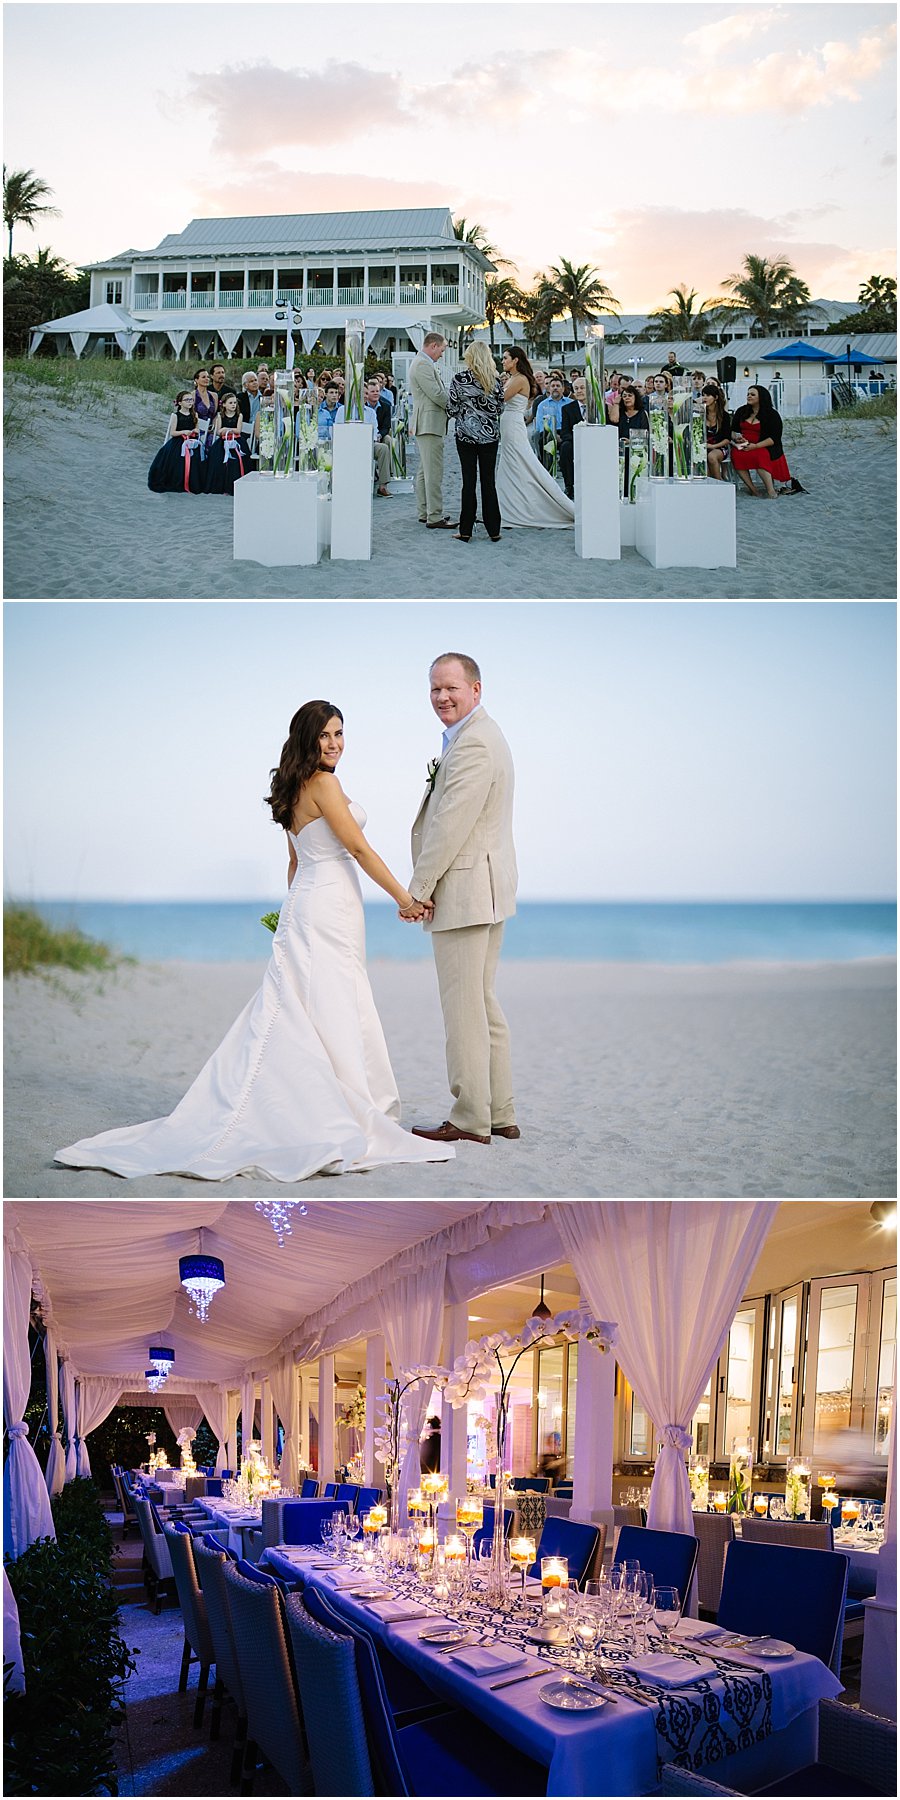 Seagate Hotel and Beach Club | Top Palm Beach Wedding Venue | Married in Palm Beach | www.marriedinpalmbeach.com | The Harmons Photography